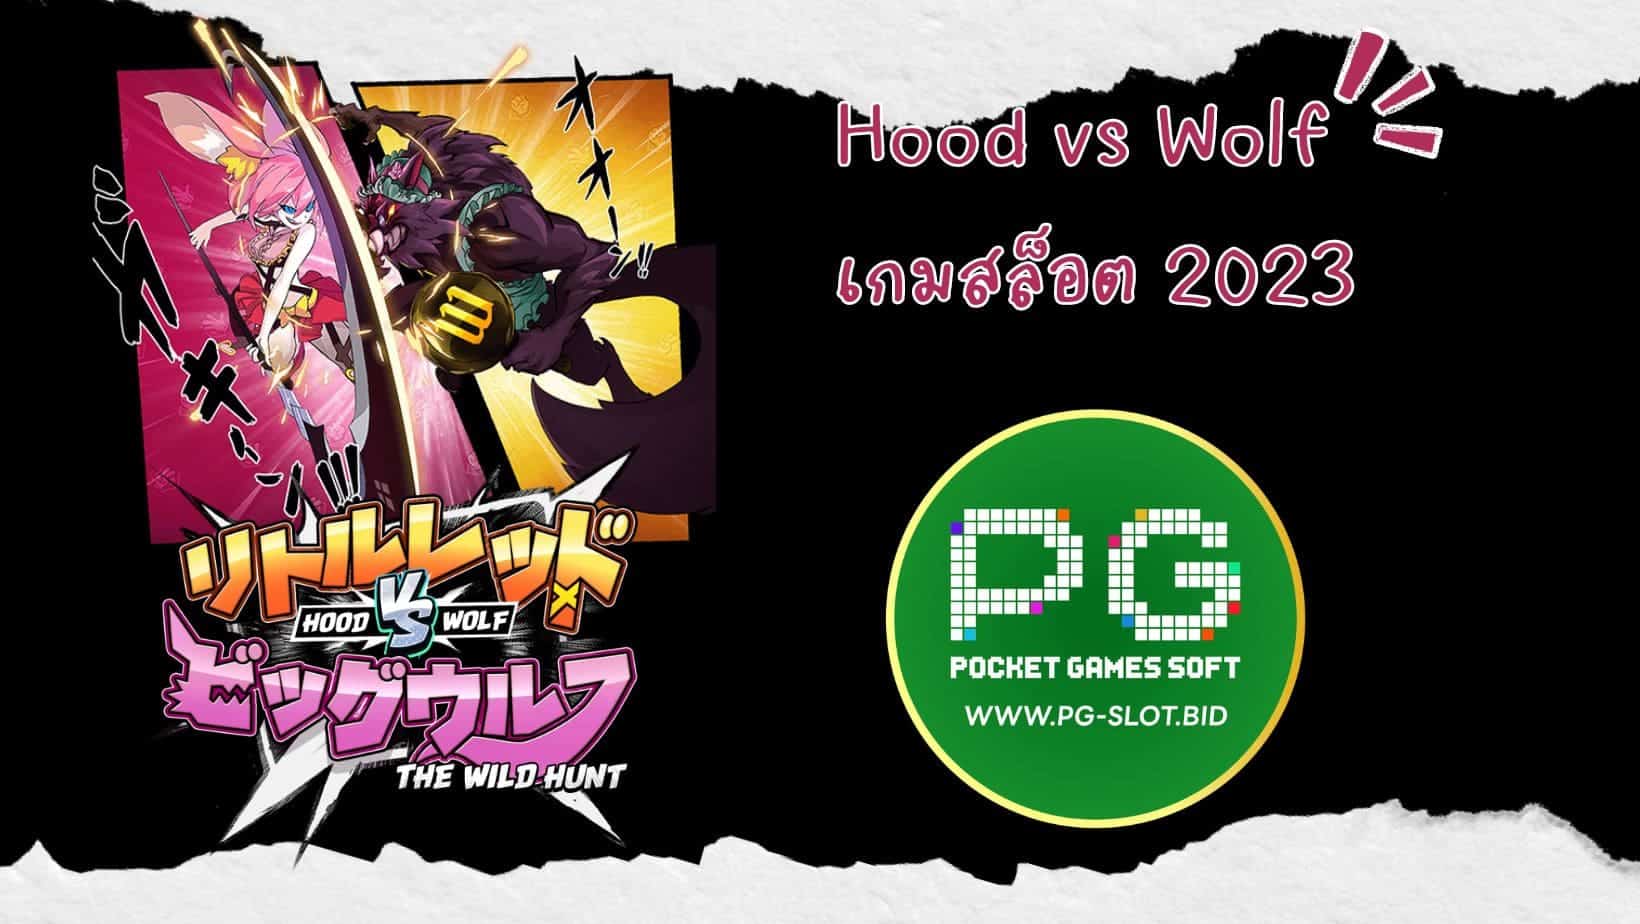 Hood vs Wolf เกมสล็อต 2023